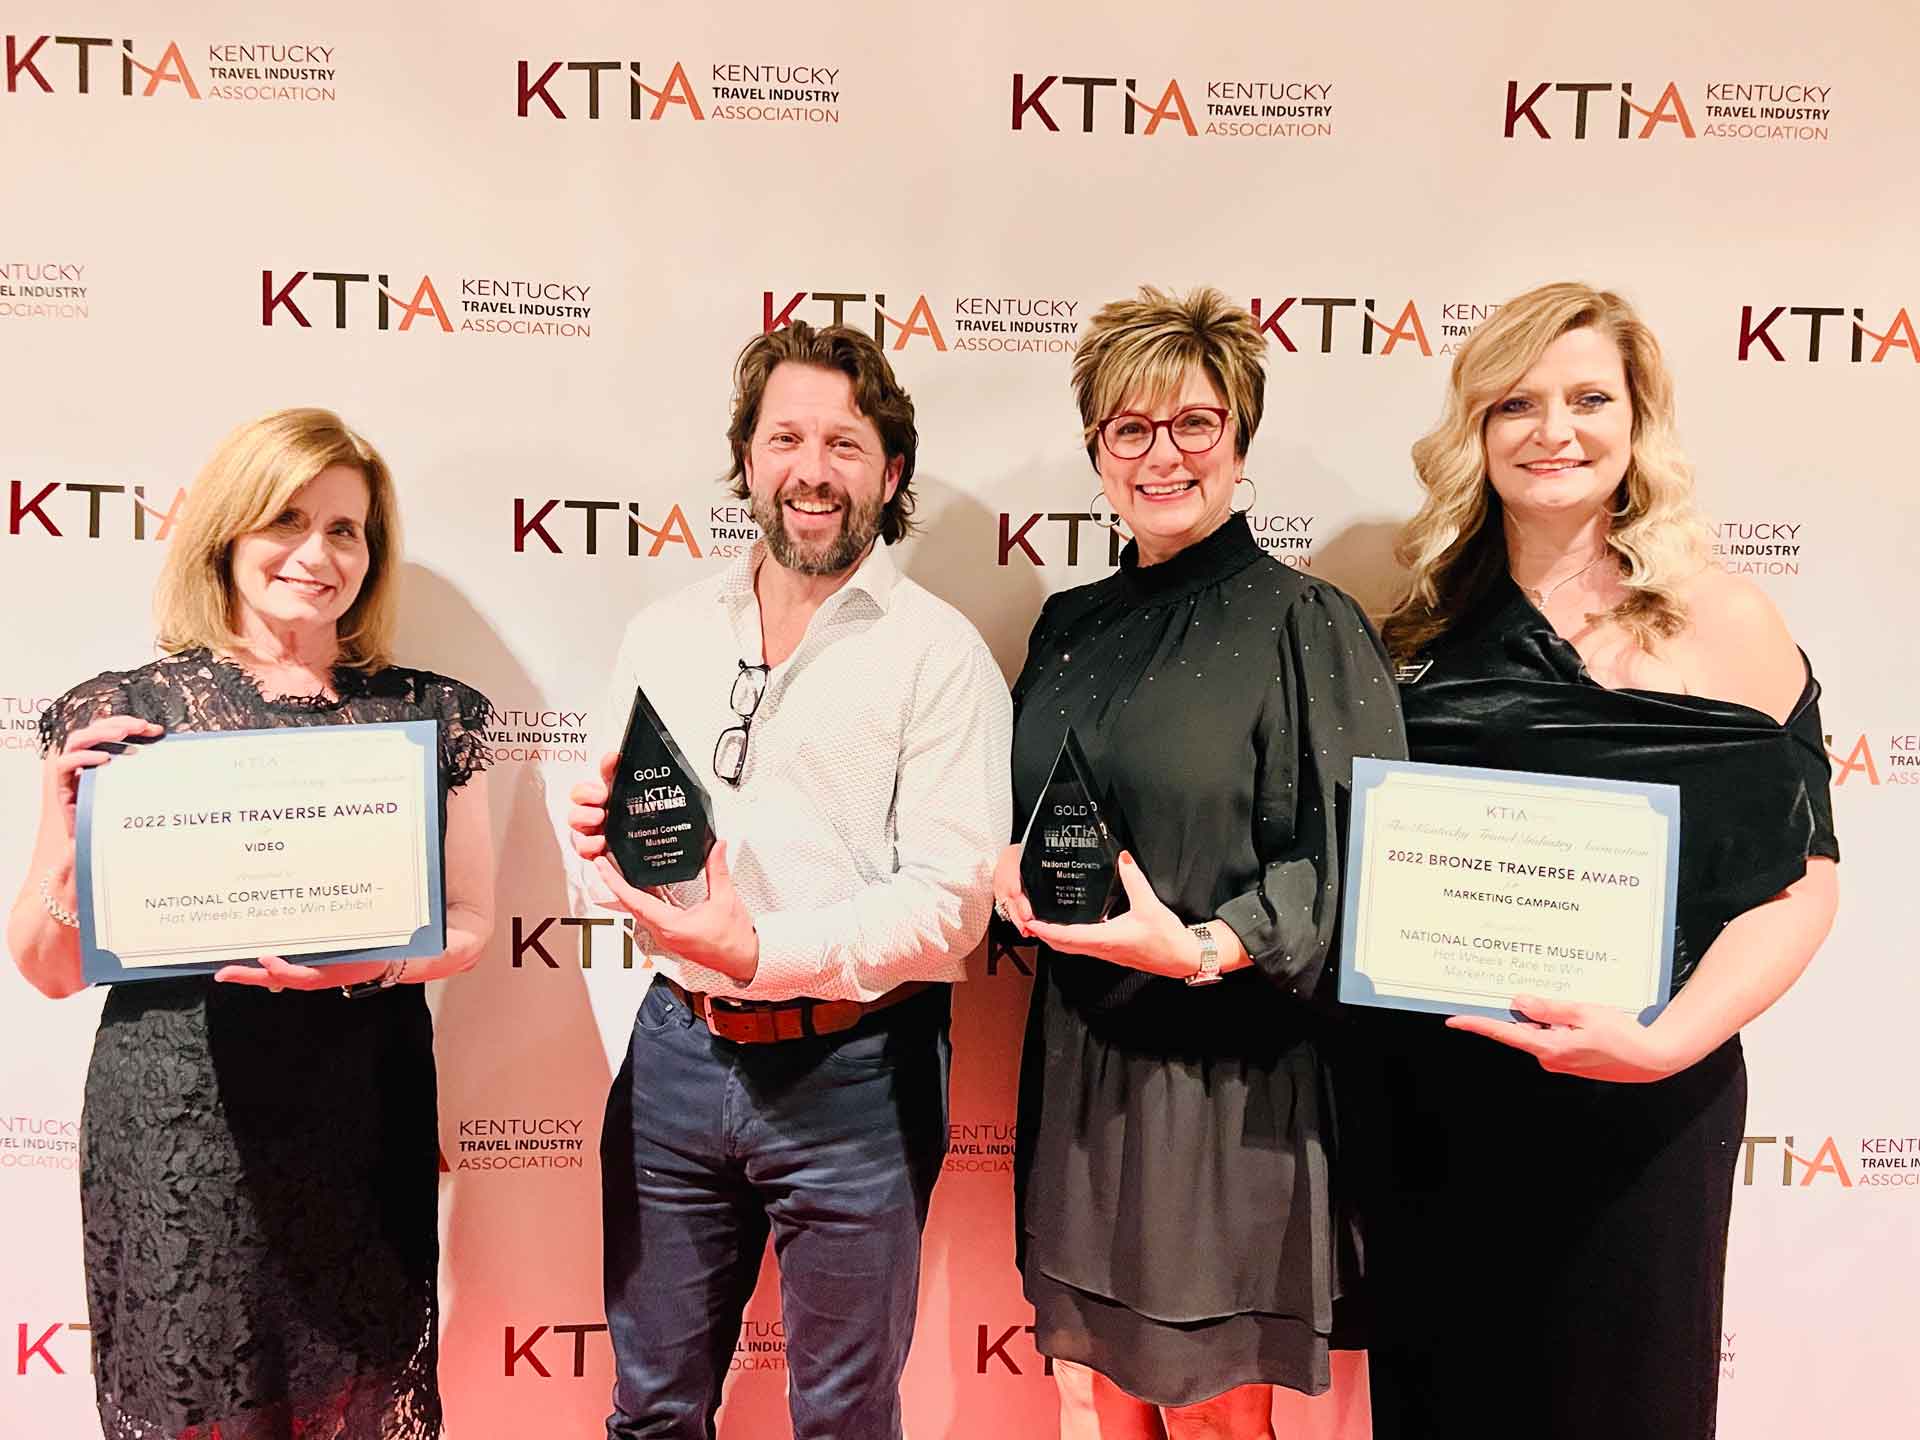 National Corvette Museum Wins KTIA and AMA Awards For Marketing Initiatives